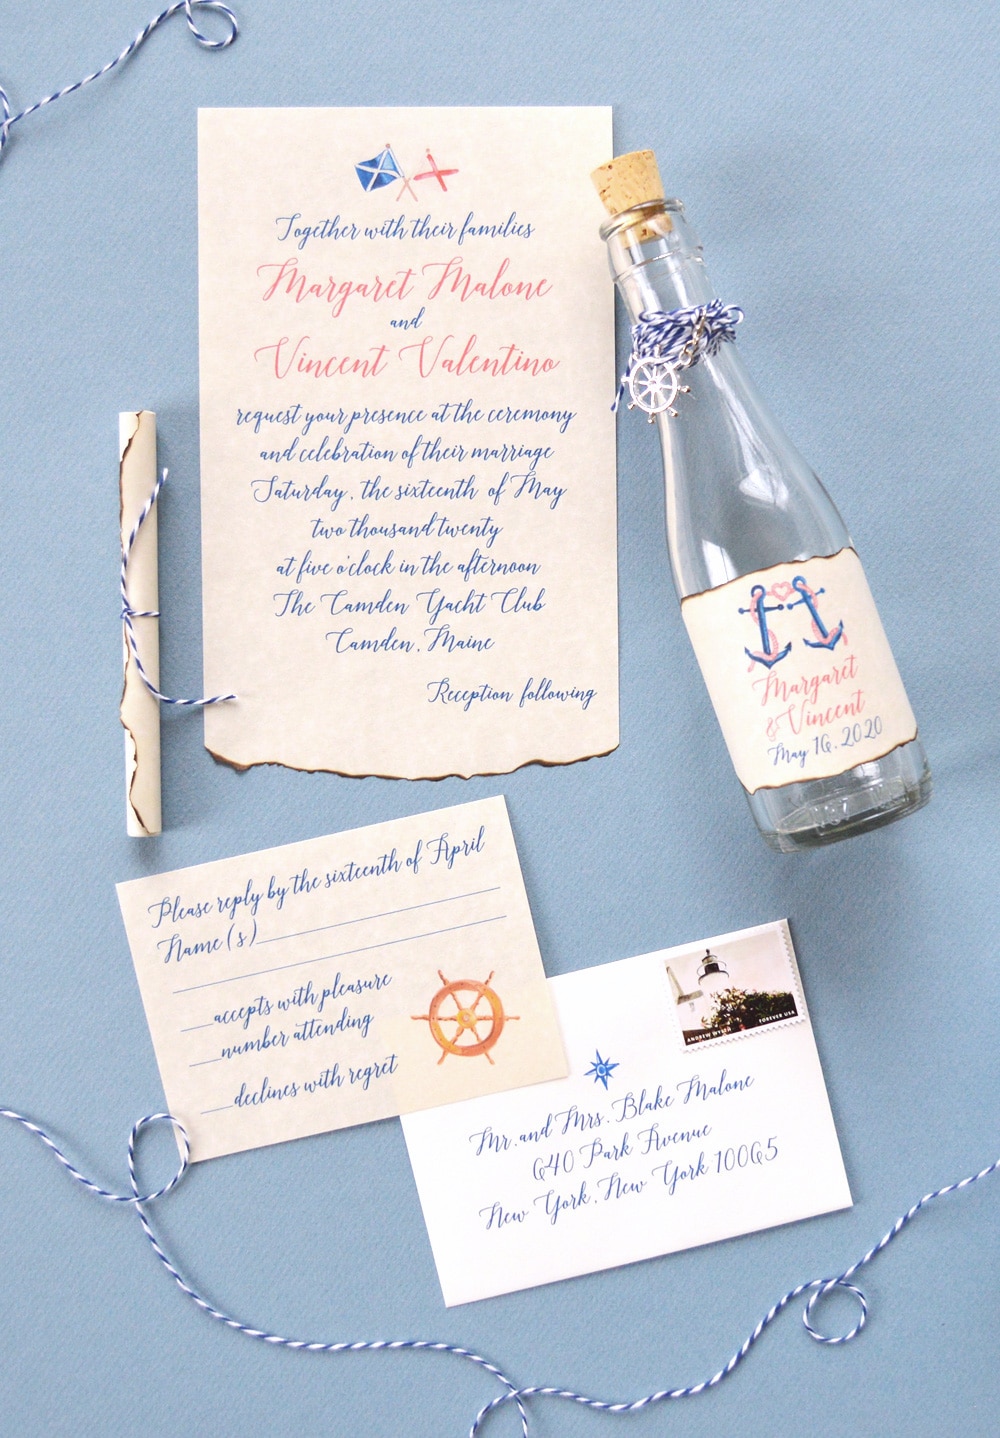 27 Sea-worthy Nautical Wedding Invitations. Creative nautical bottle wedding invitations by artist Michelle Mospens. | Mospens Studio